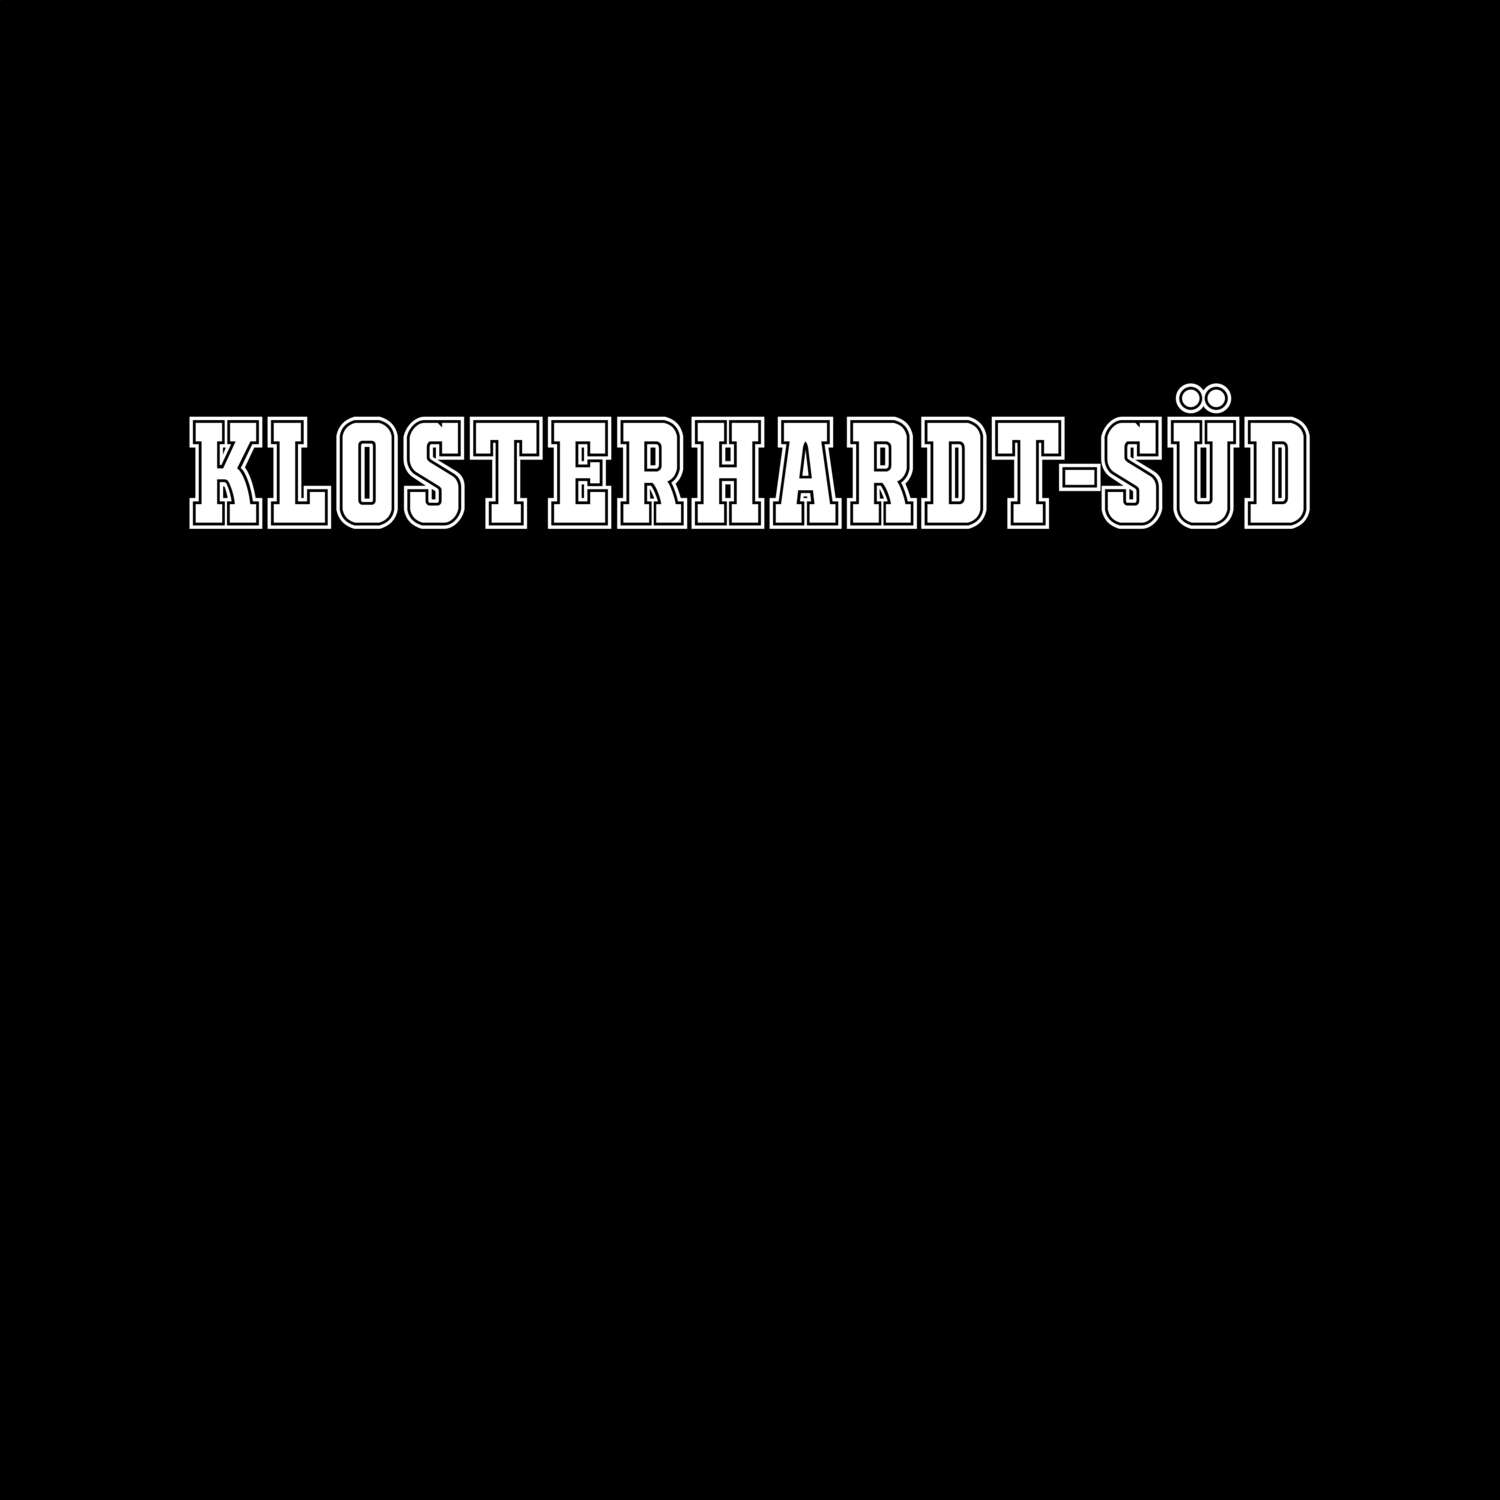 Klosterhardt-Süd T-Shirt »Classic«